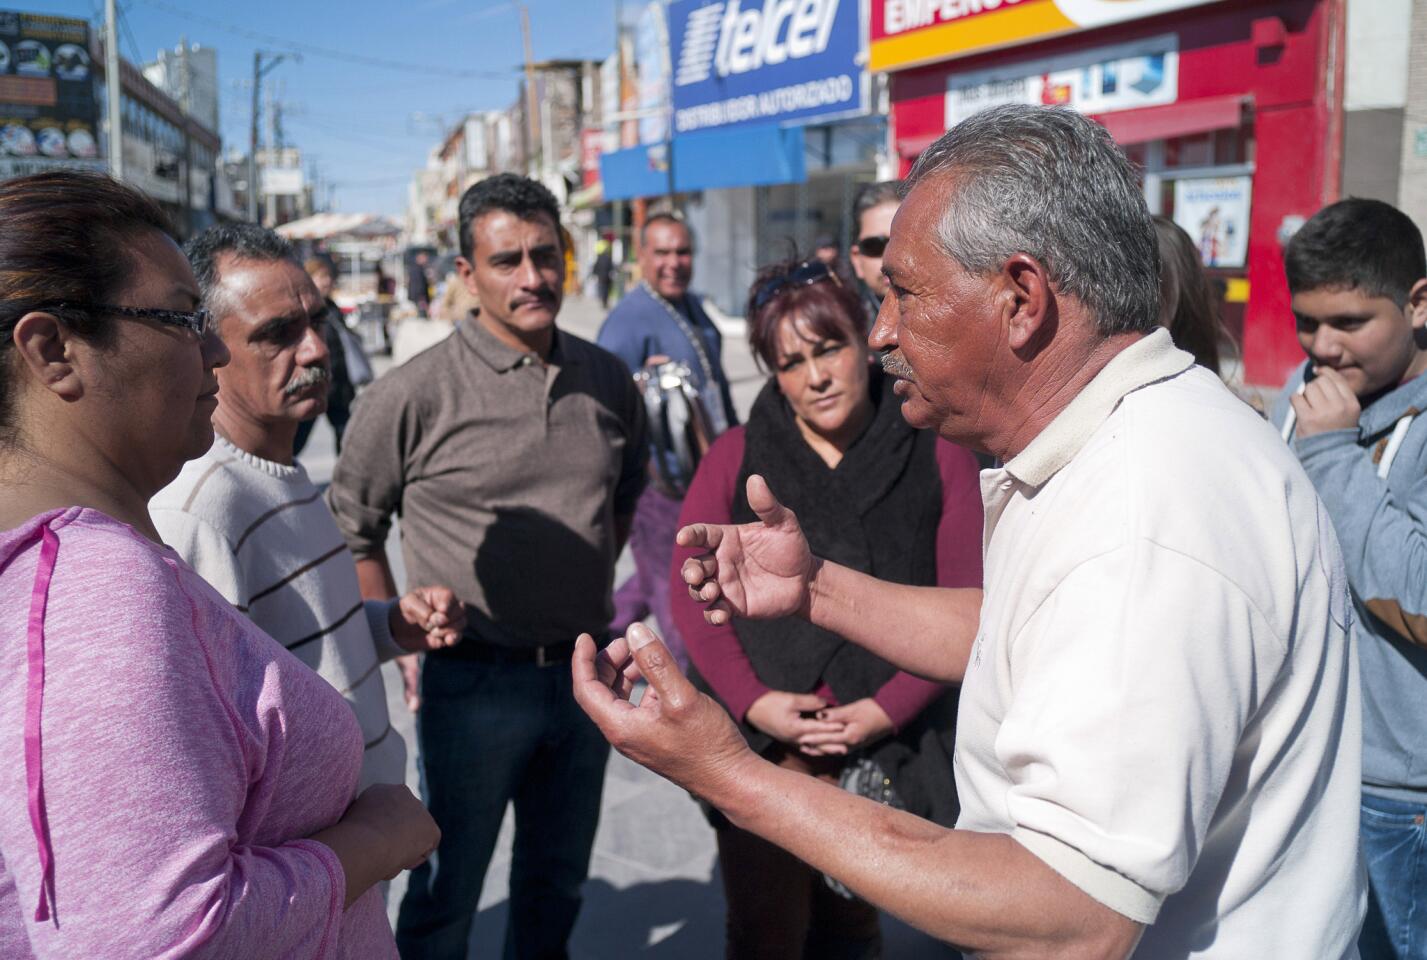 Ciudad Juarez prepares for Pope Francis visit